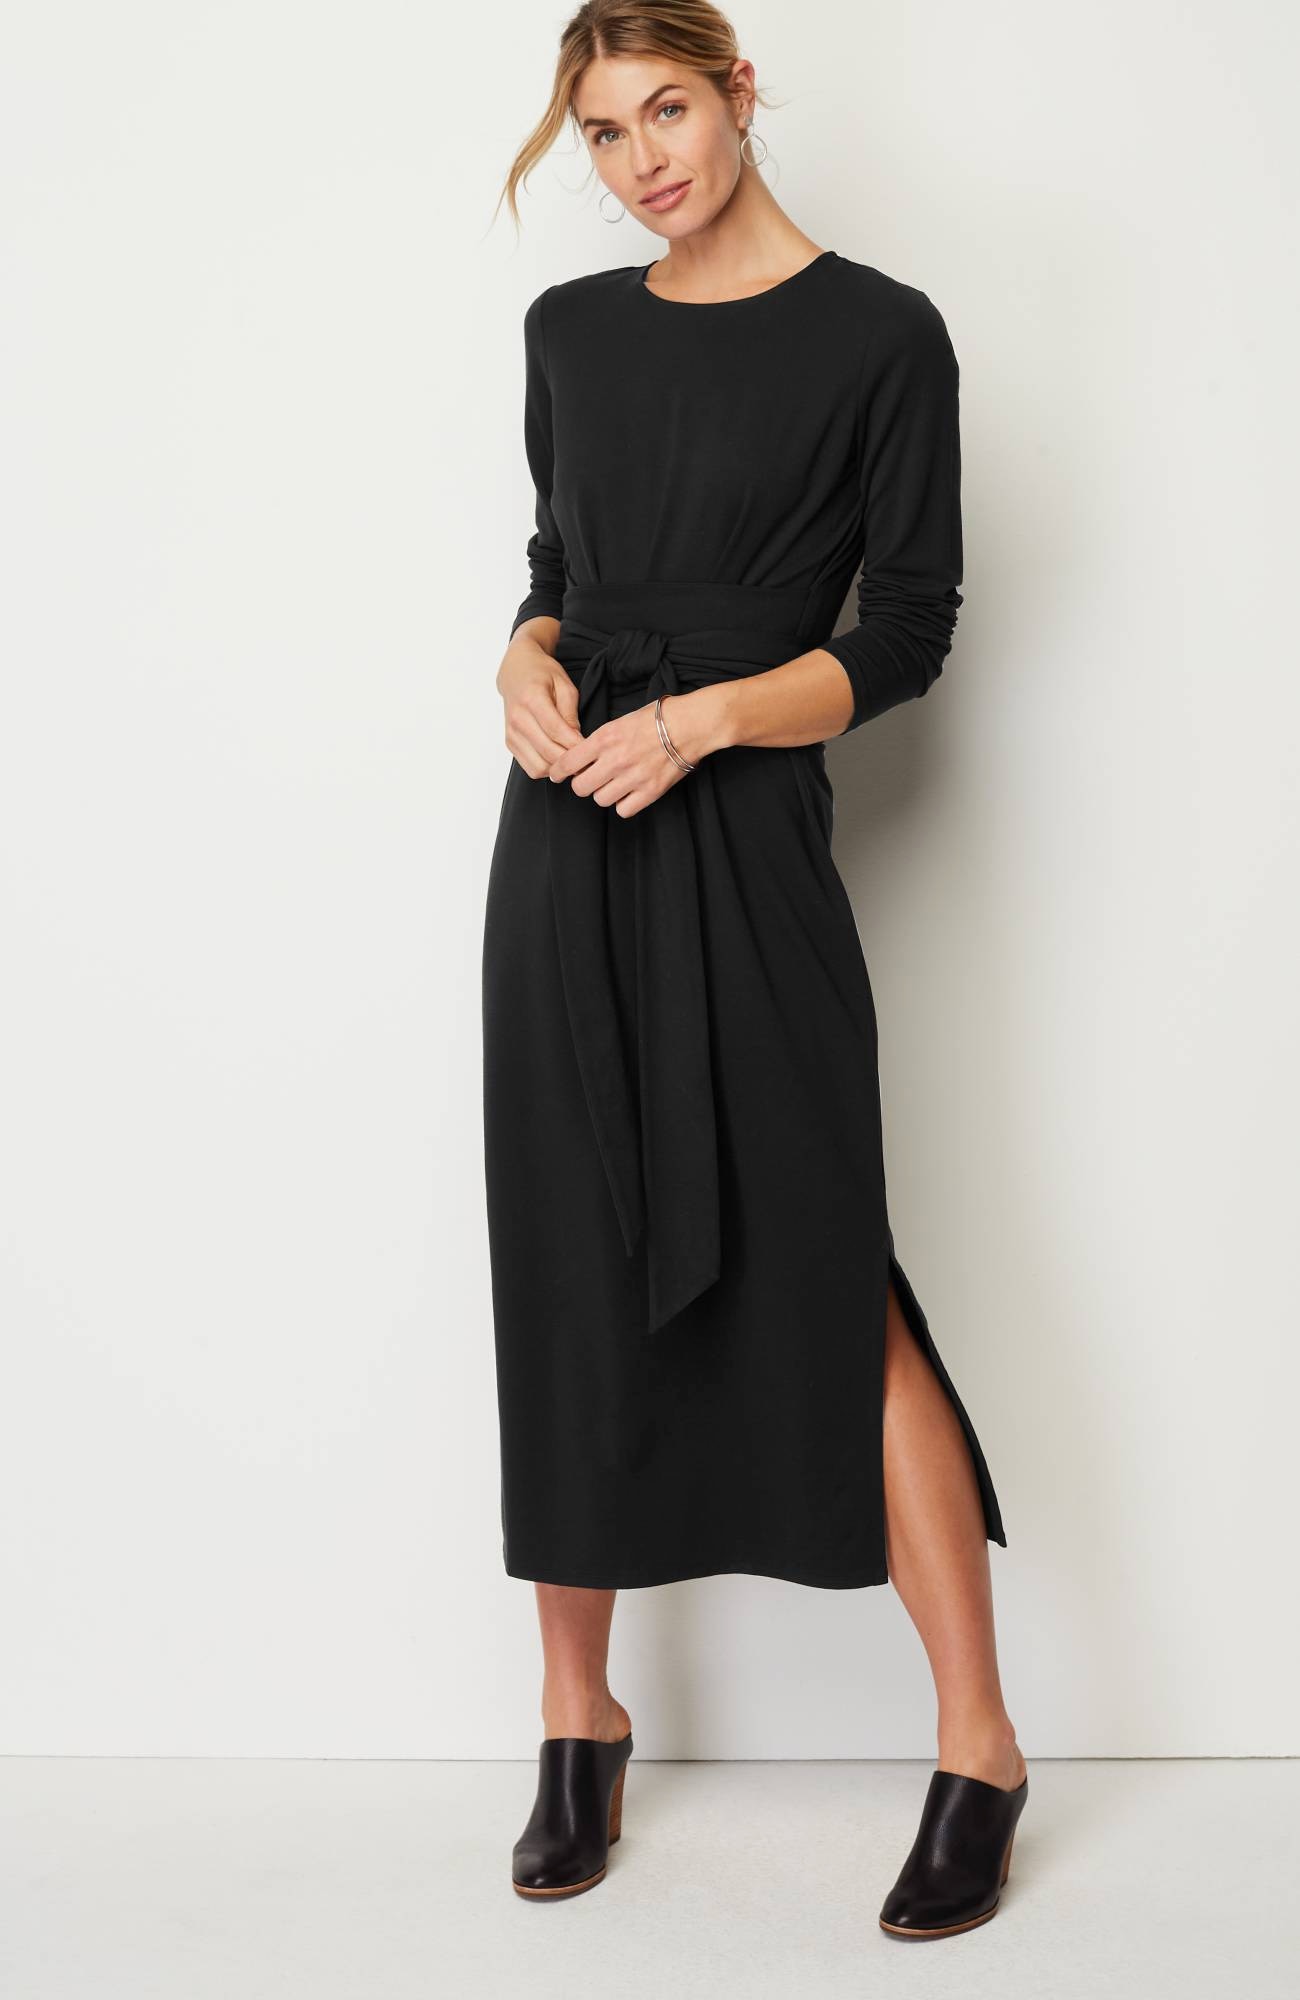 J. Jill Wearever Collection Polka Dot 3/4 Sleeve Dress Black Petite Small  D16